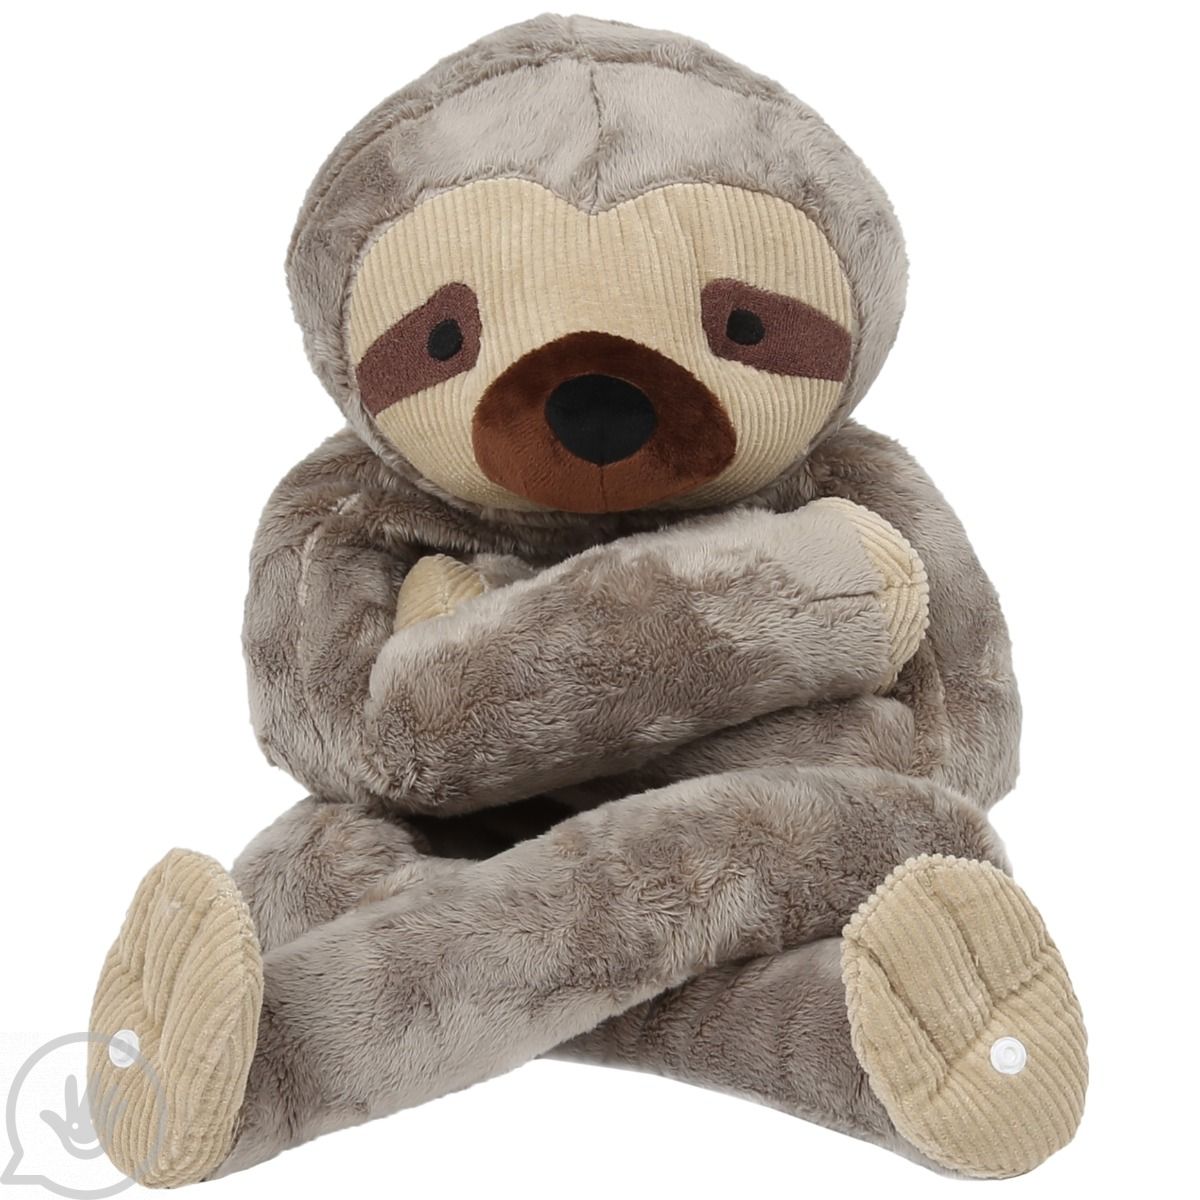 baby sloth hugging stuffed animal